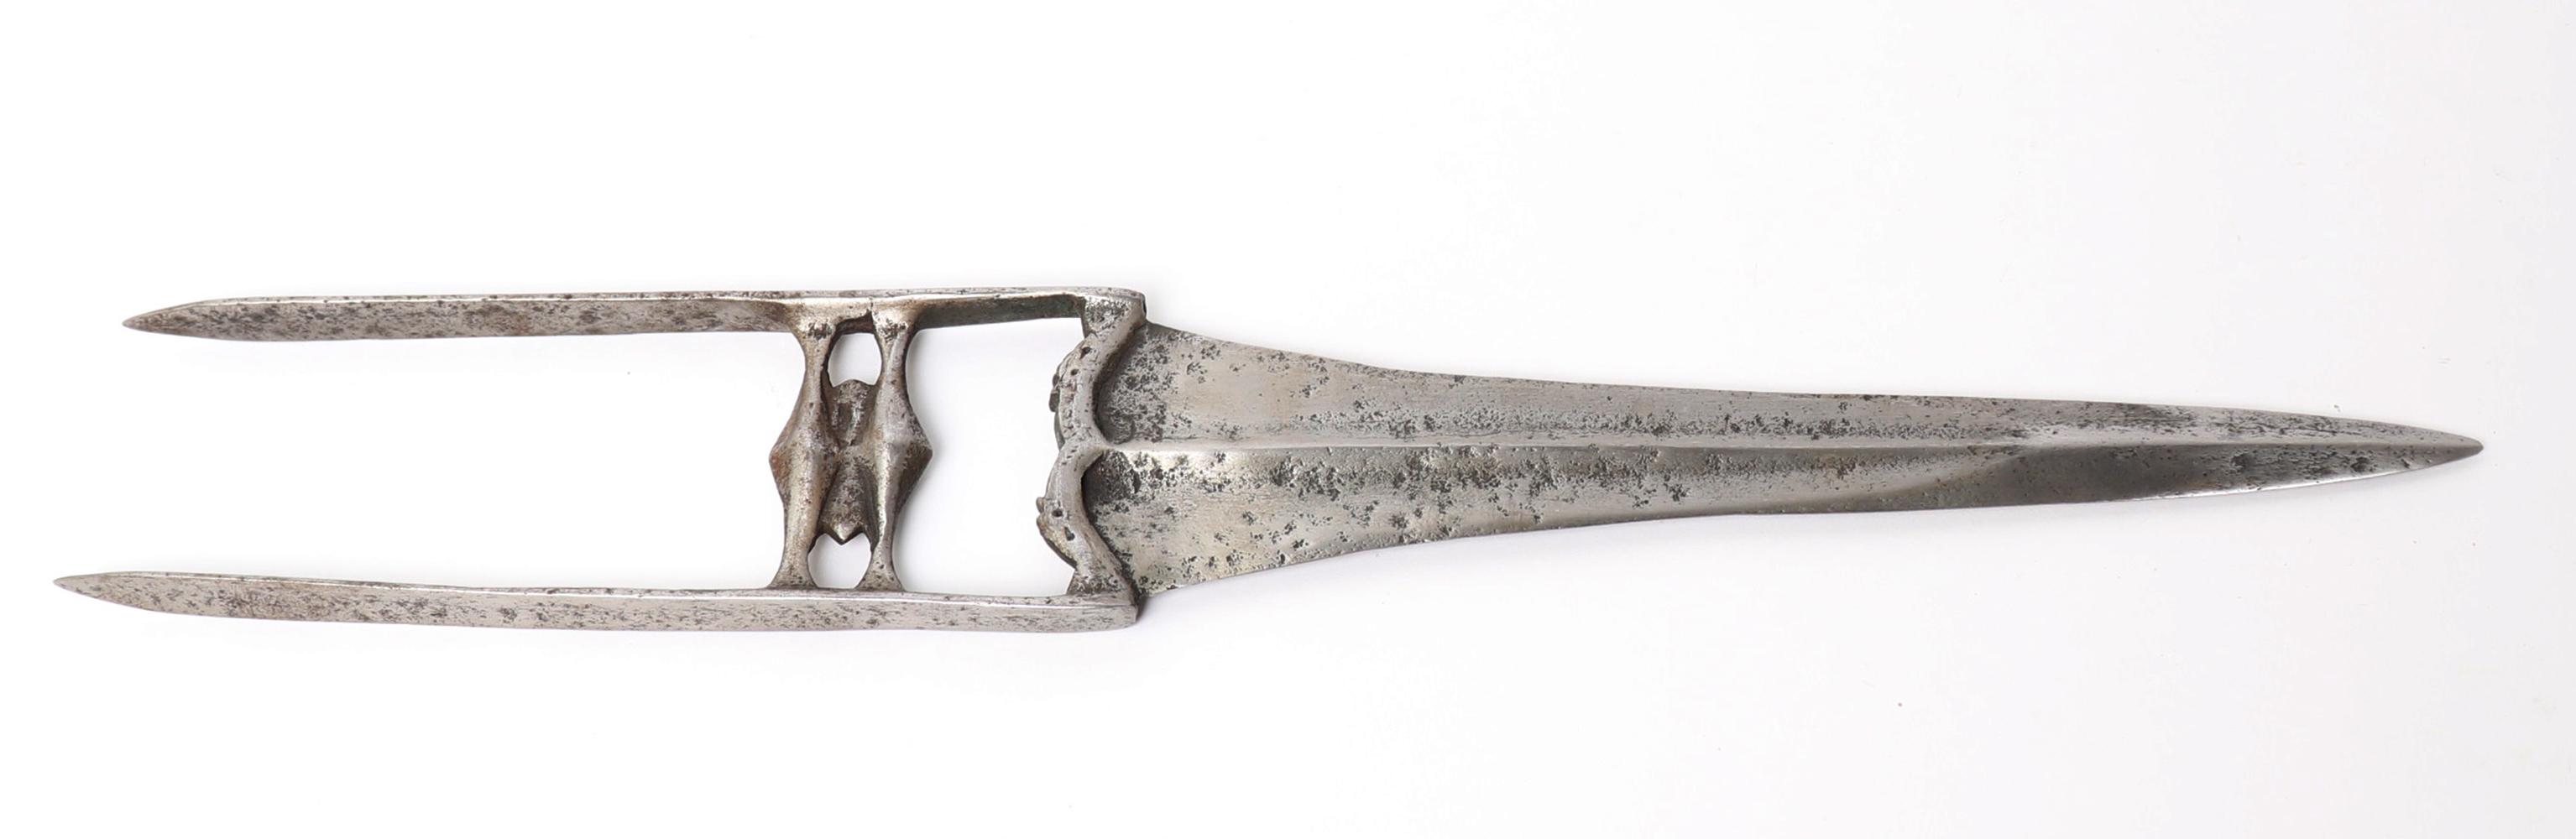 Indian Katar Punch Dagger, 18th/19th c.